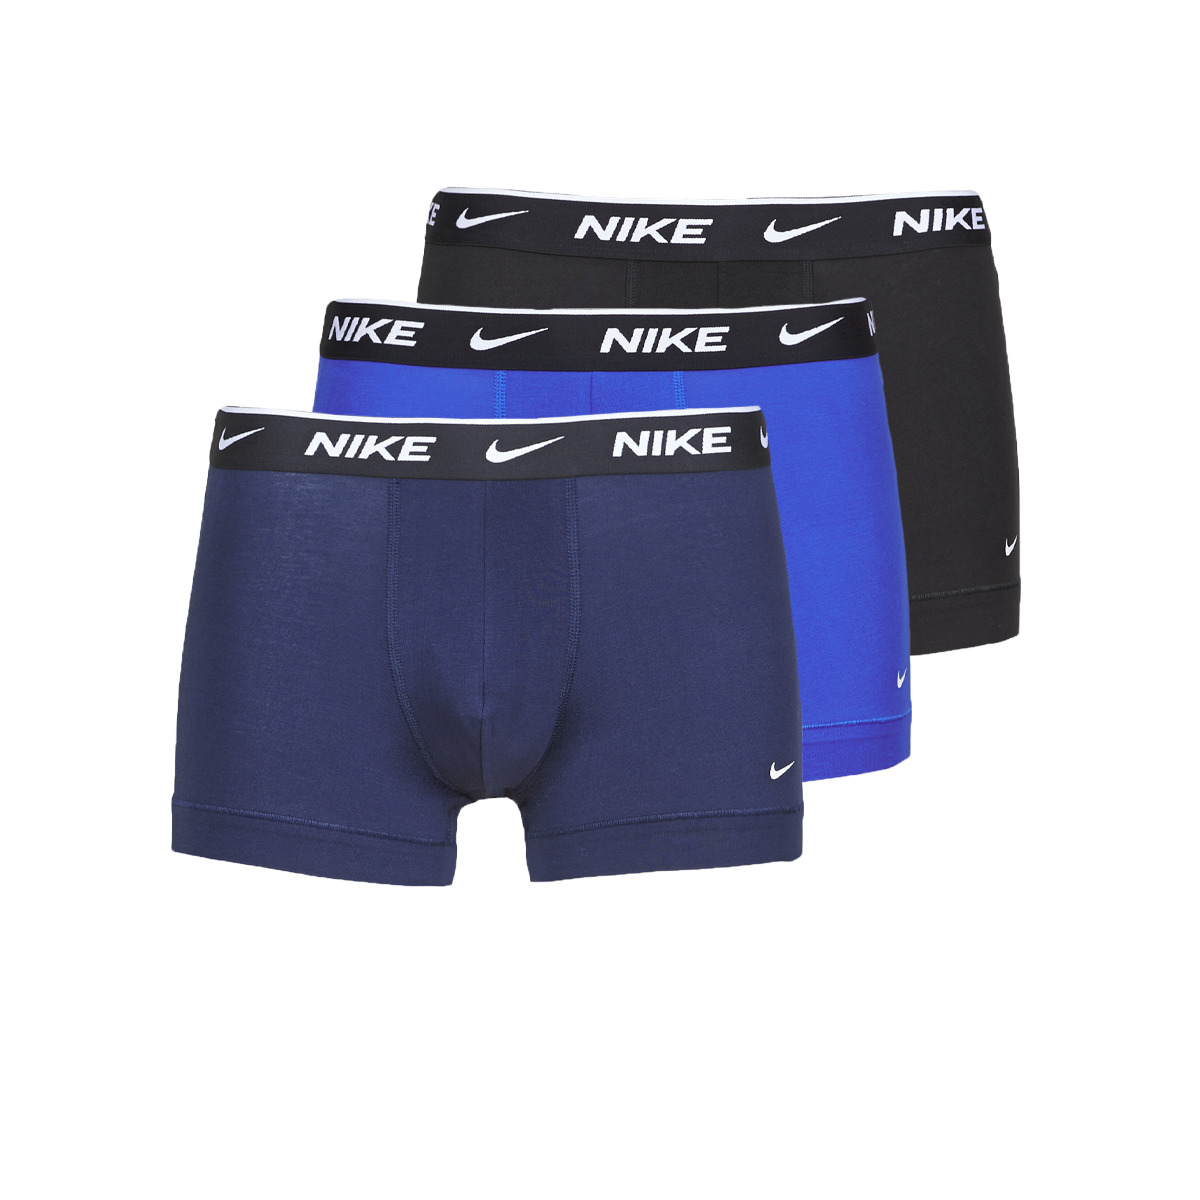 Nike Noir / Marine / Bleu EVERYDAY COTTON STRETCH X3 bY